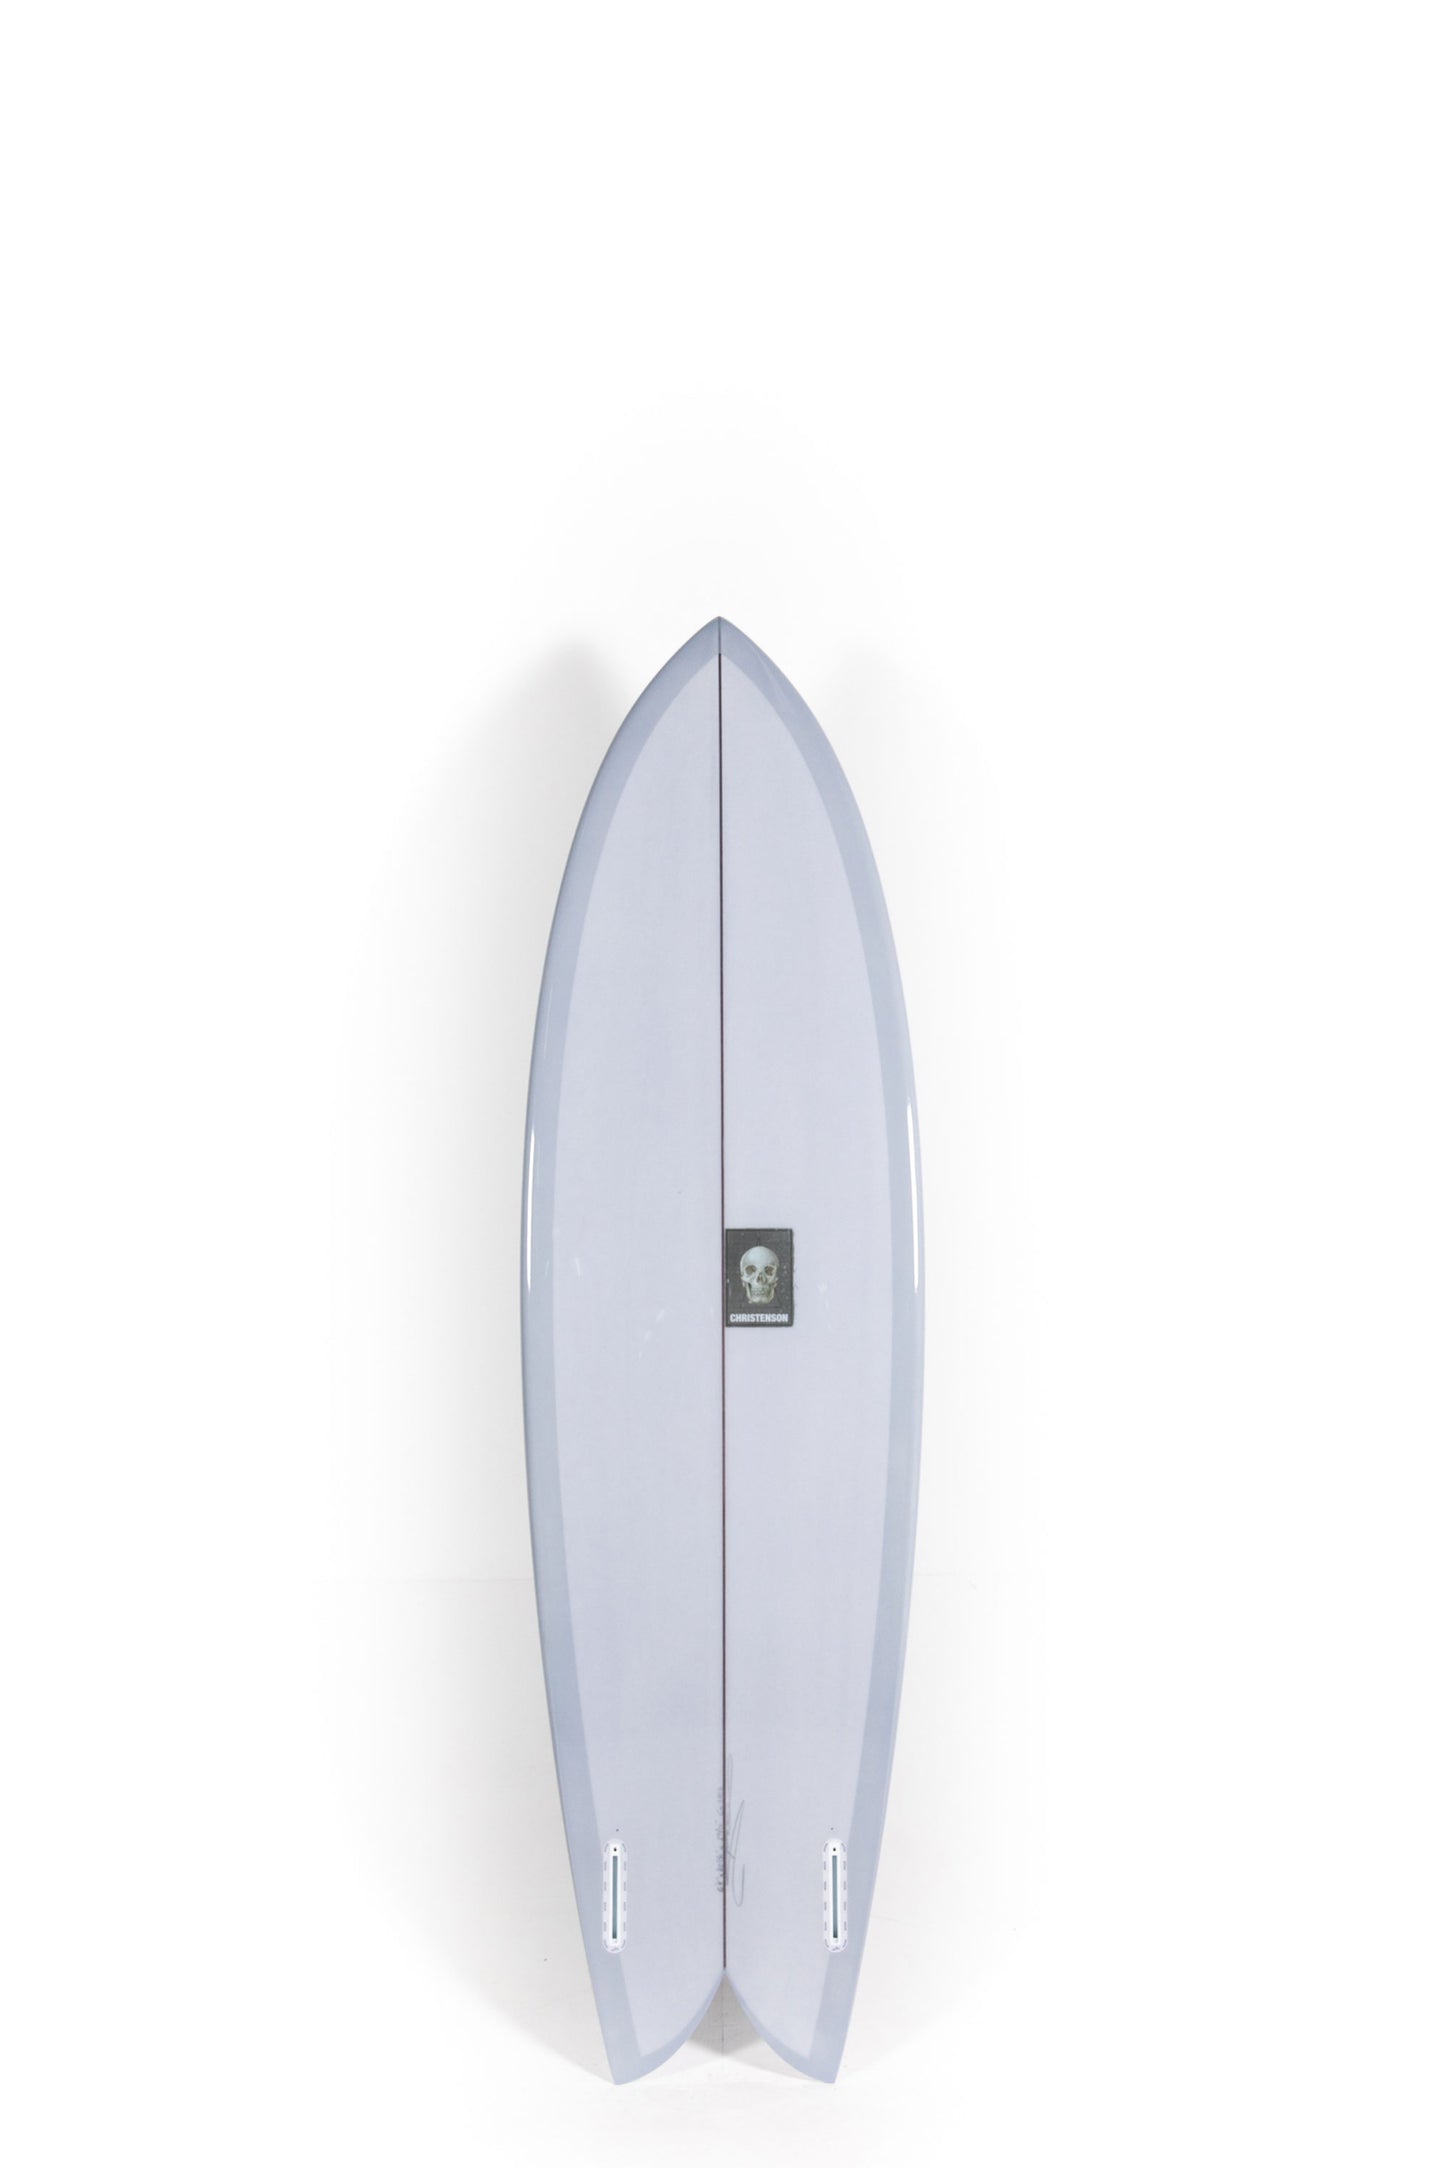 Christenson Surfboards - LONG PHISH - 6'4" x 20 5/8 x 2 9/16 x 35.77L - CX05702